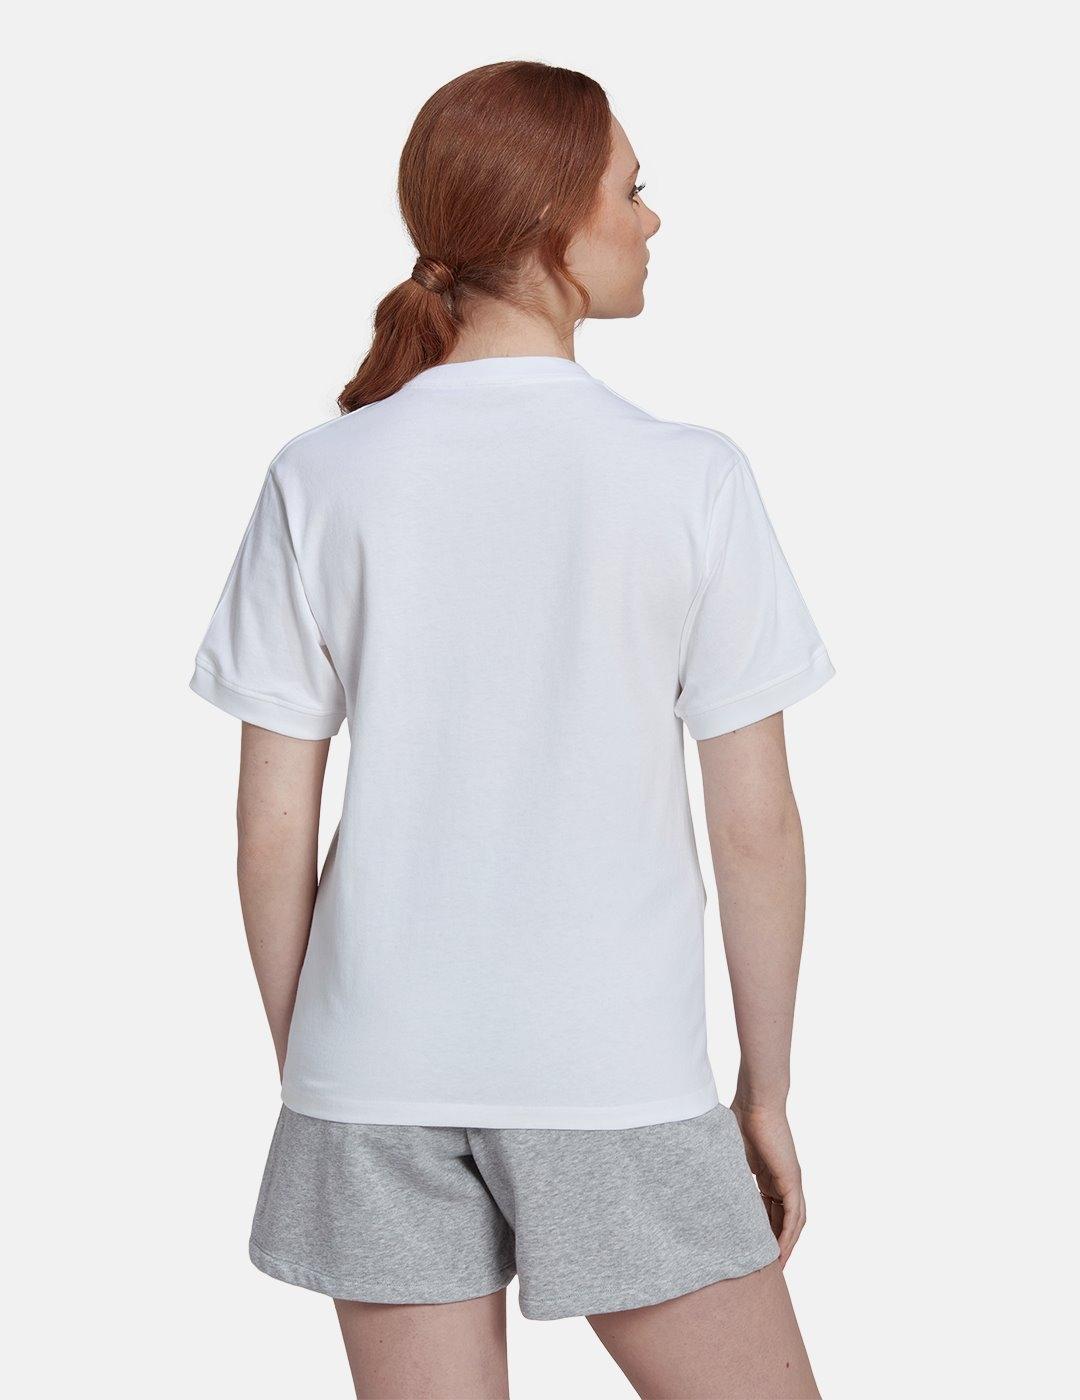 Camiseta adidas Crest Graphic Blanco Para Mujer